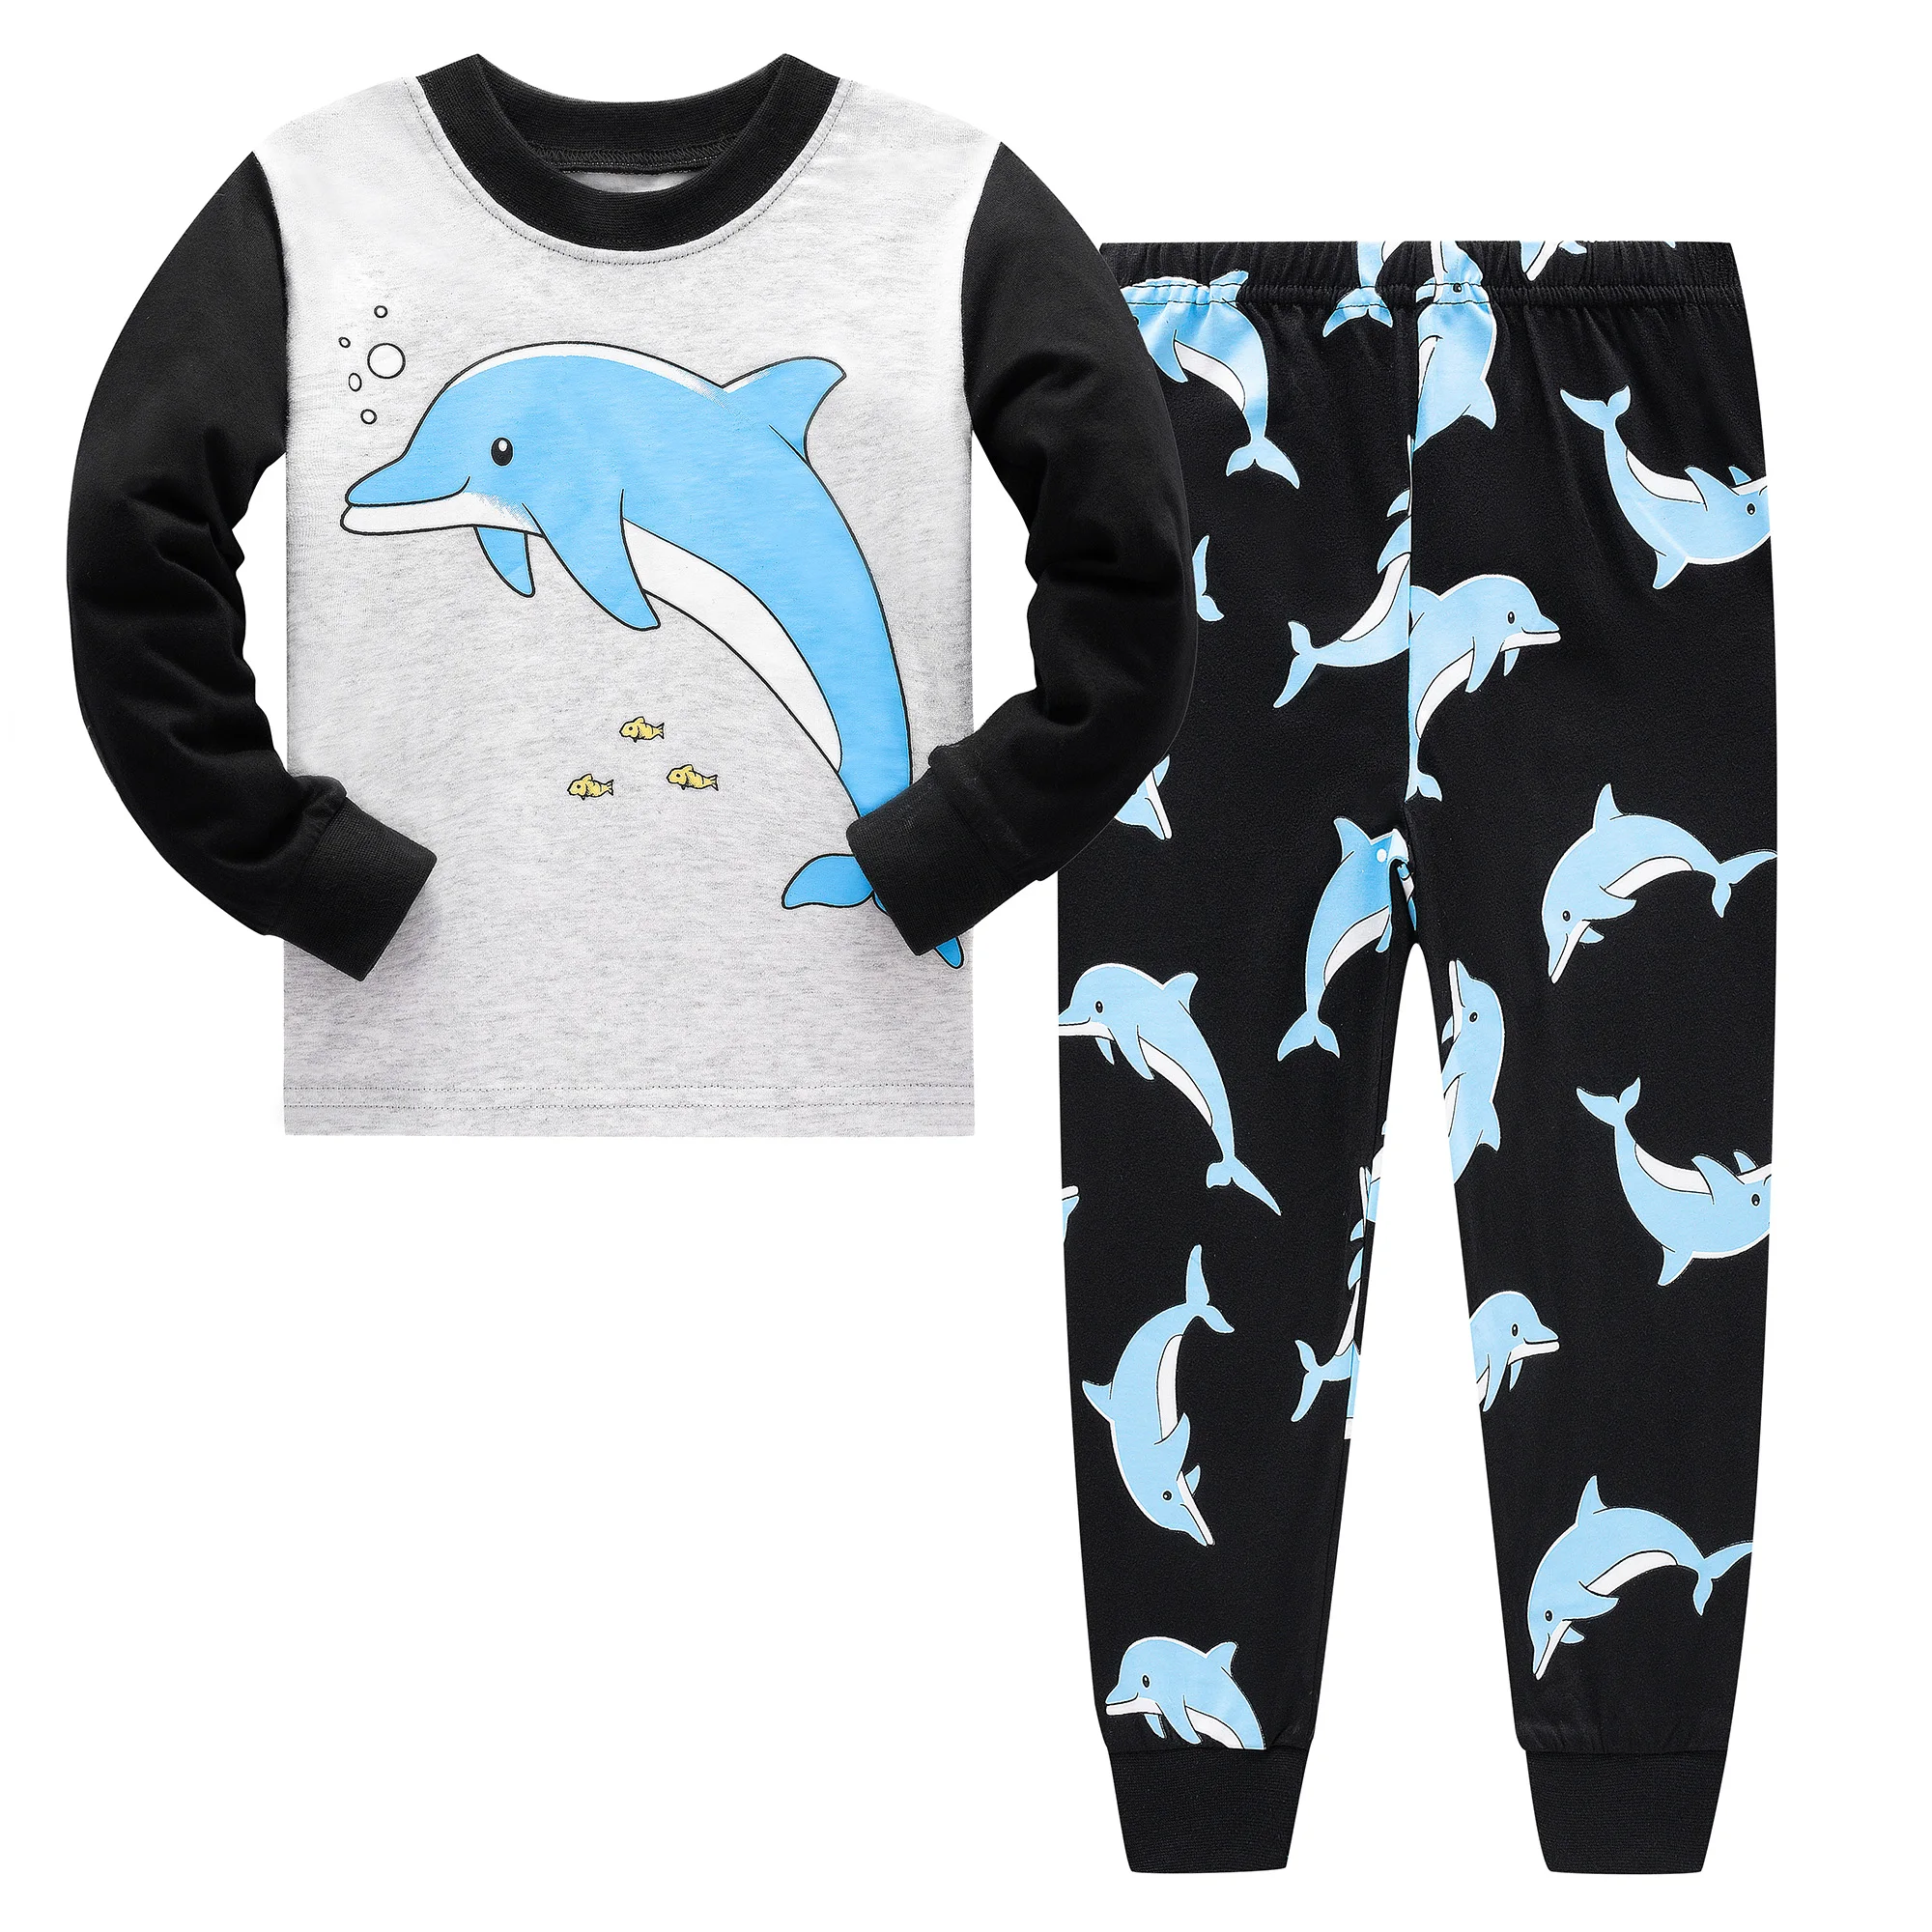 Dolphin&Fish Boys Pajamas Little Boy Toddler Pjs Set 100% Cotton Kids Clothes Children Sleepwear 